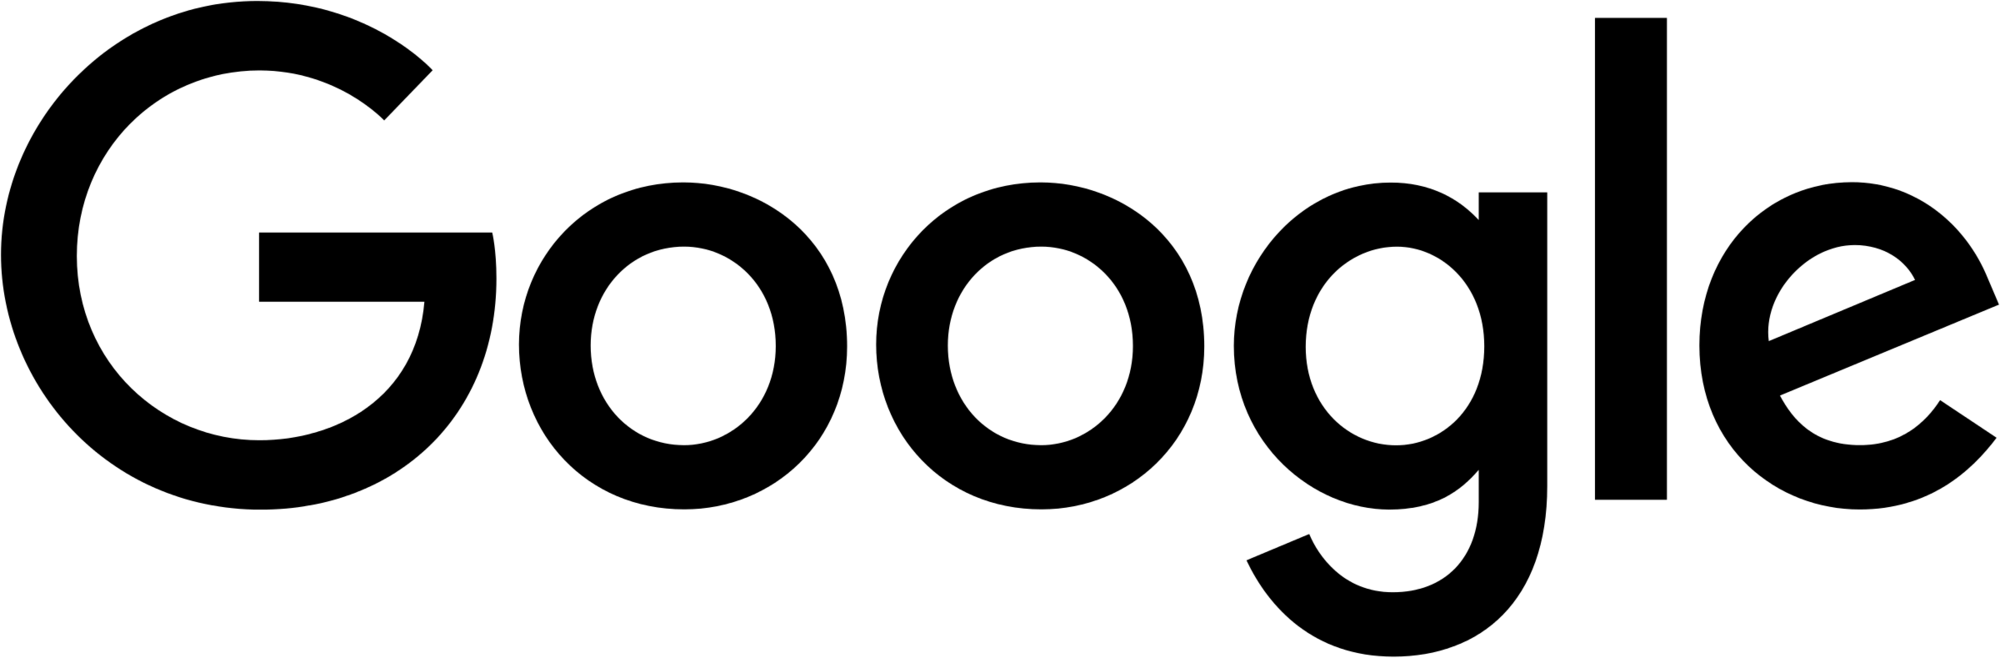 Google Monochrome Logo Black